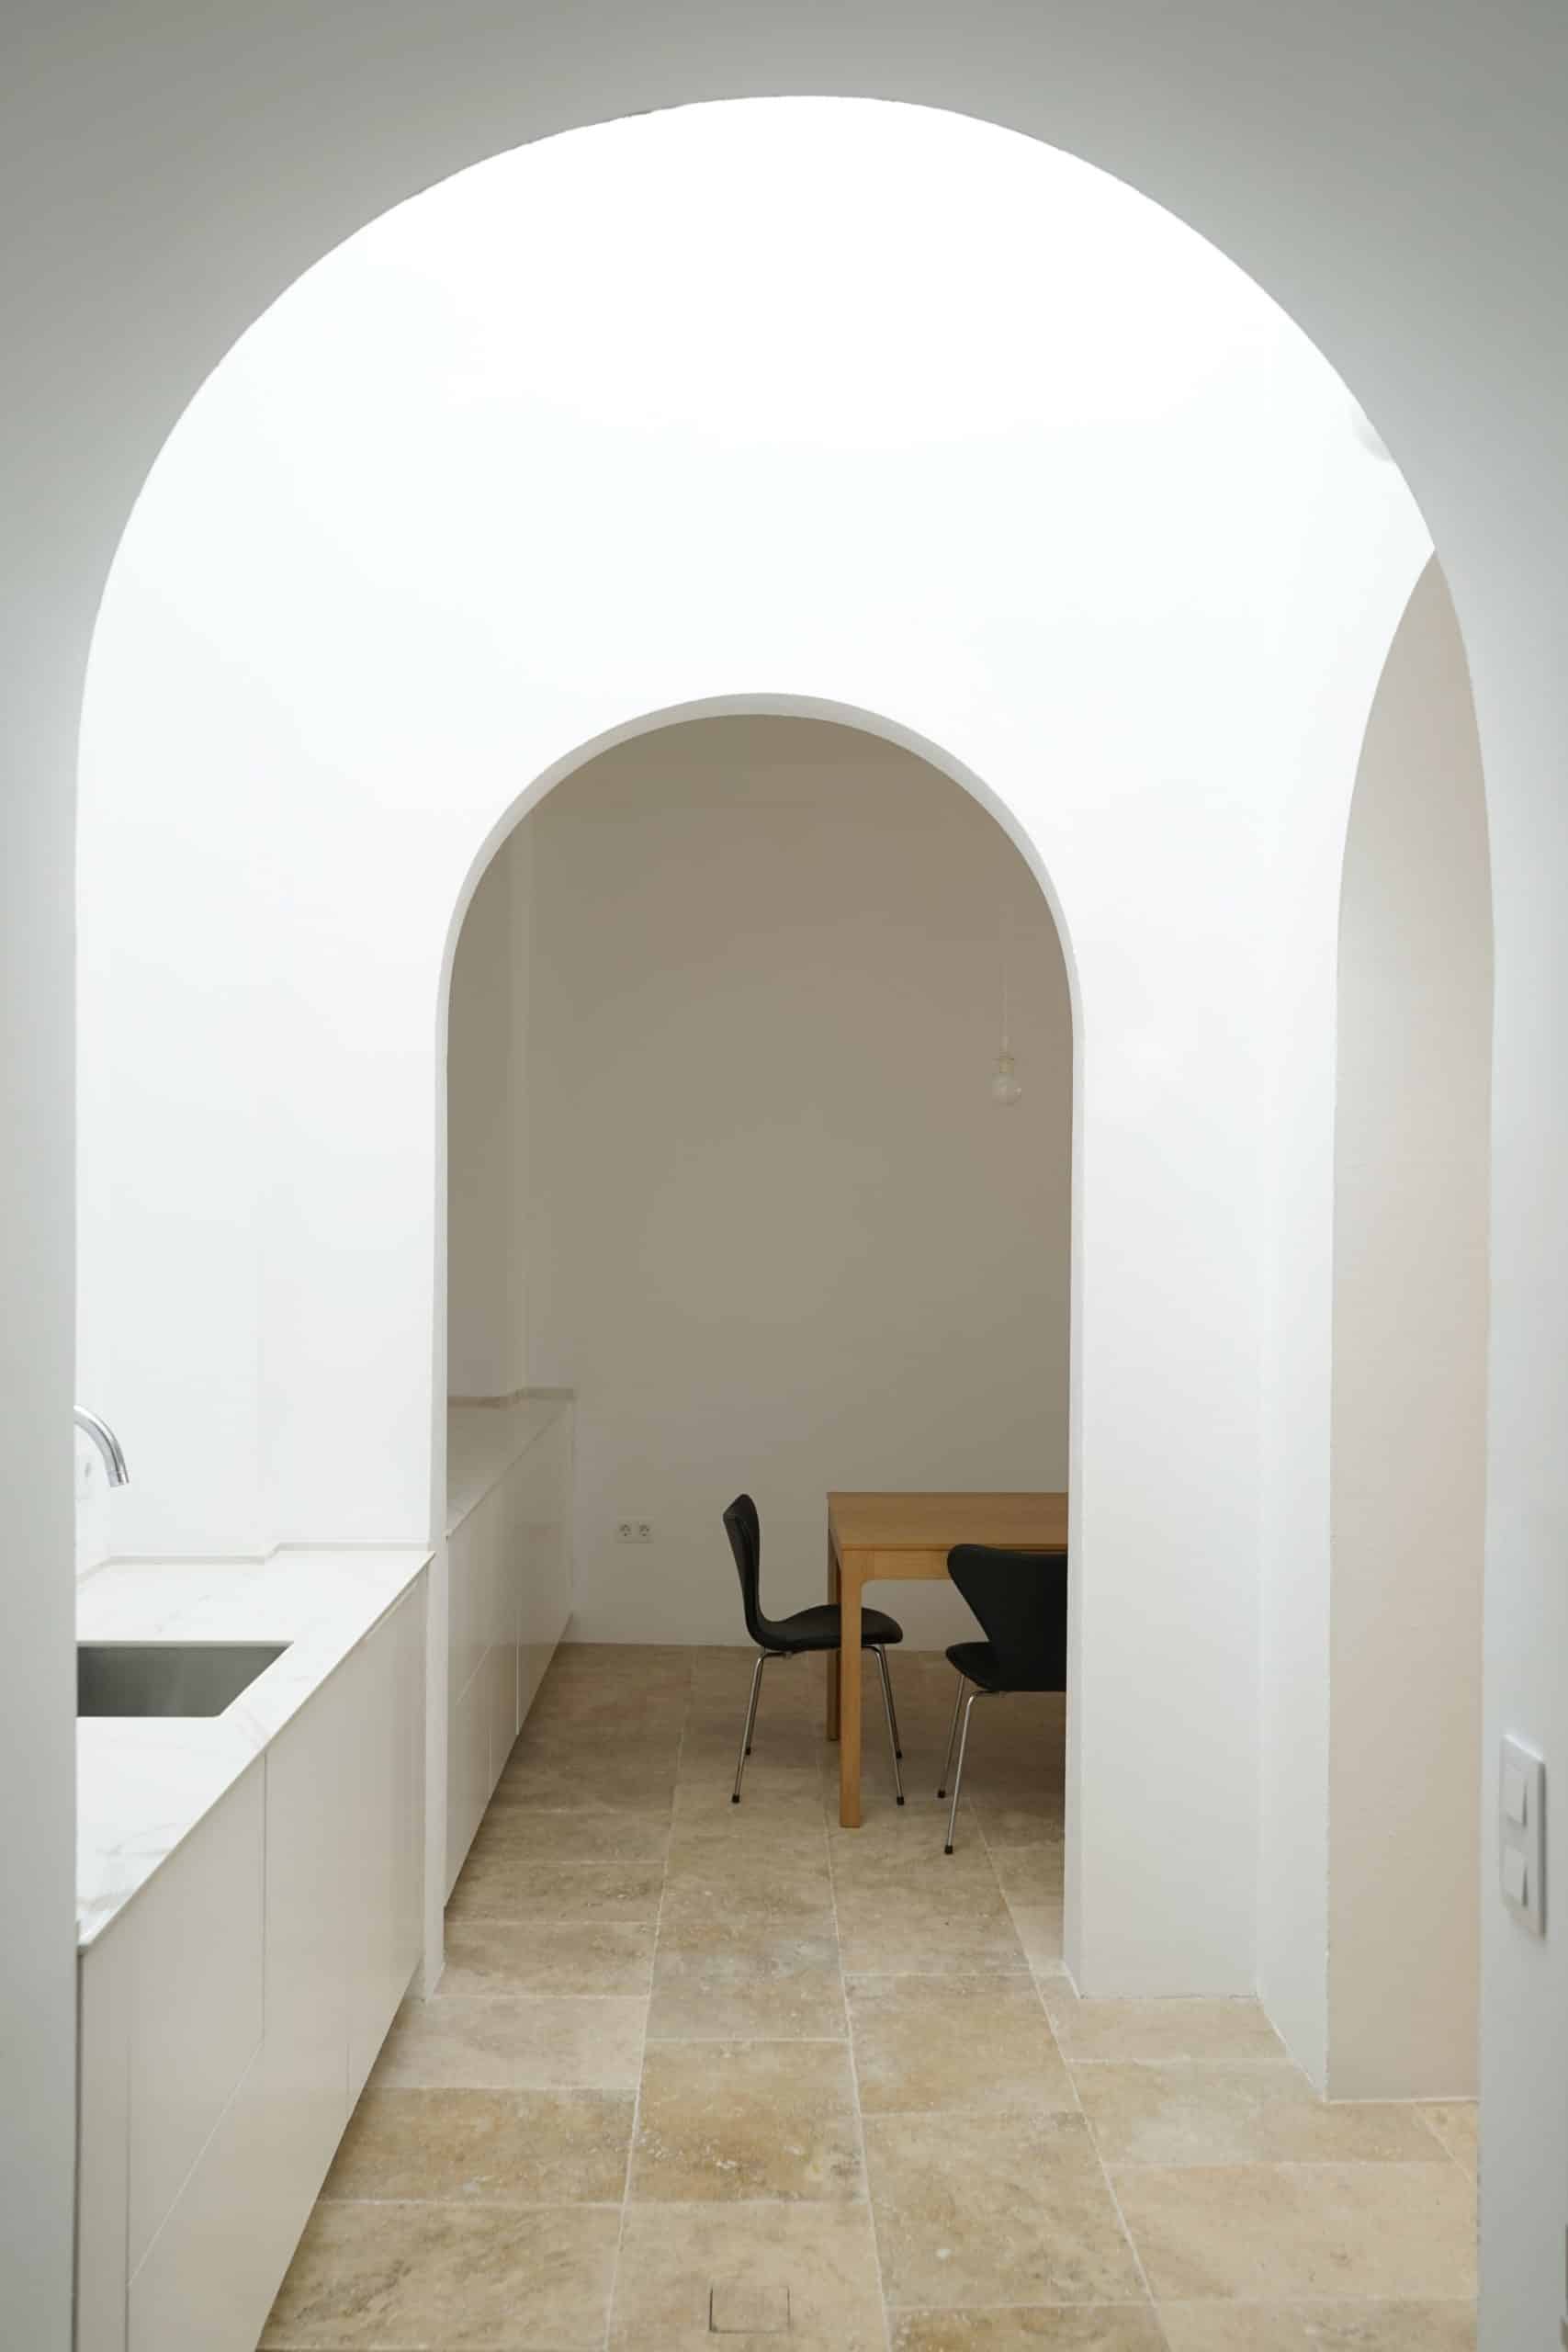 Arco blanco minimalista. Composición arquitectónica en tonos naturales.